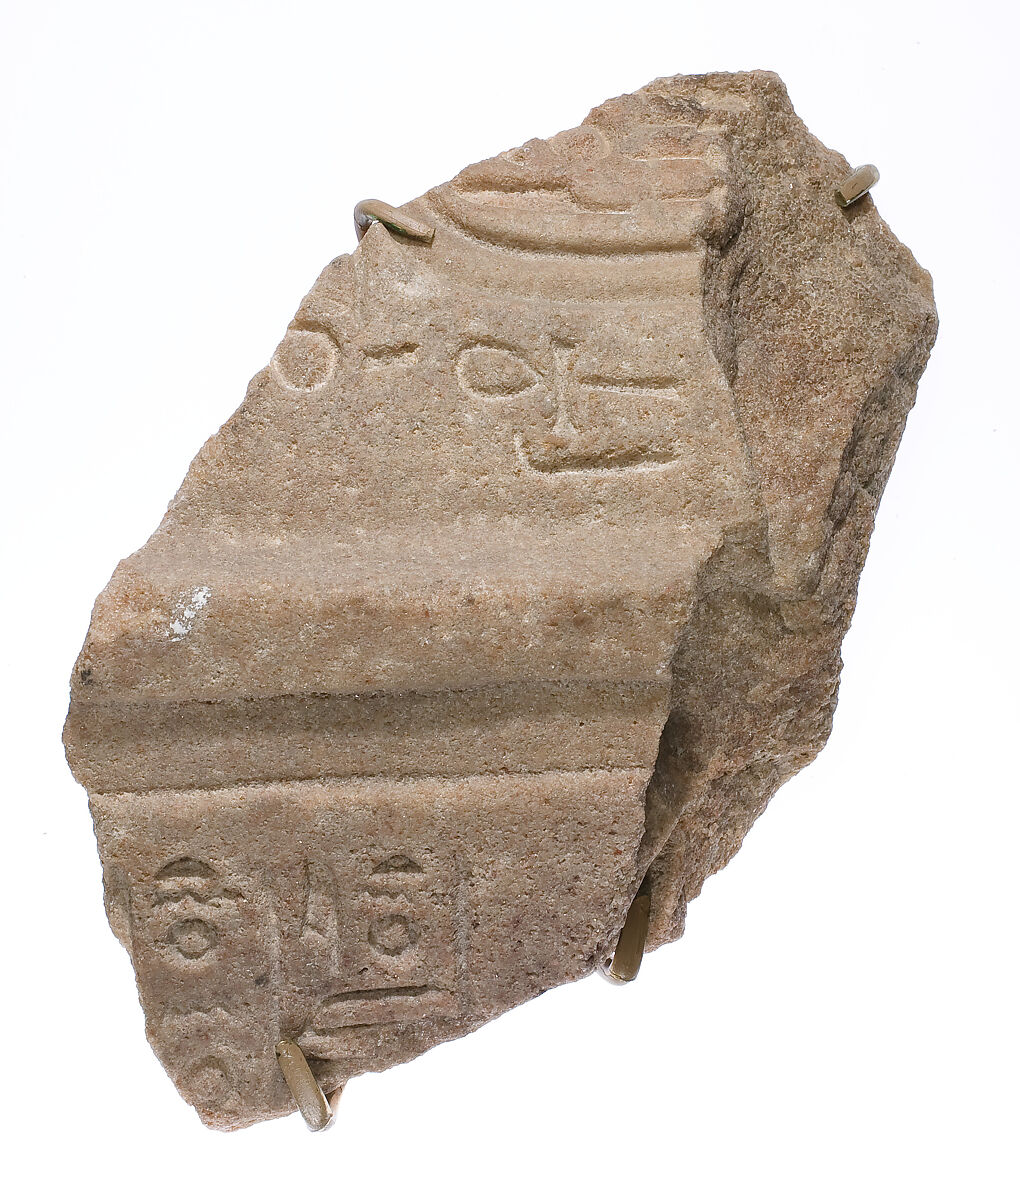 Balustrade fragment with cartouche of Nefertiti, Yellow quartzite 